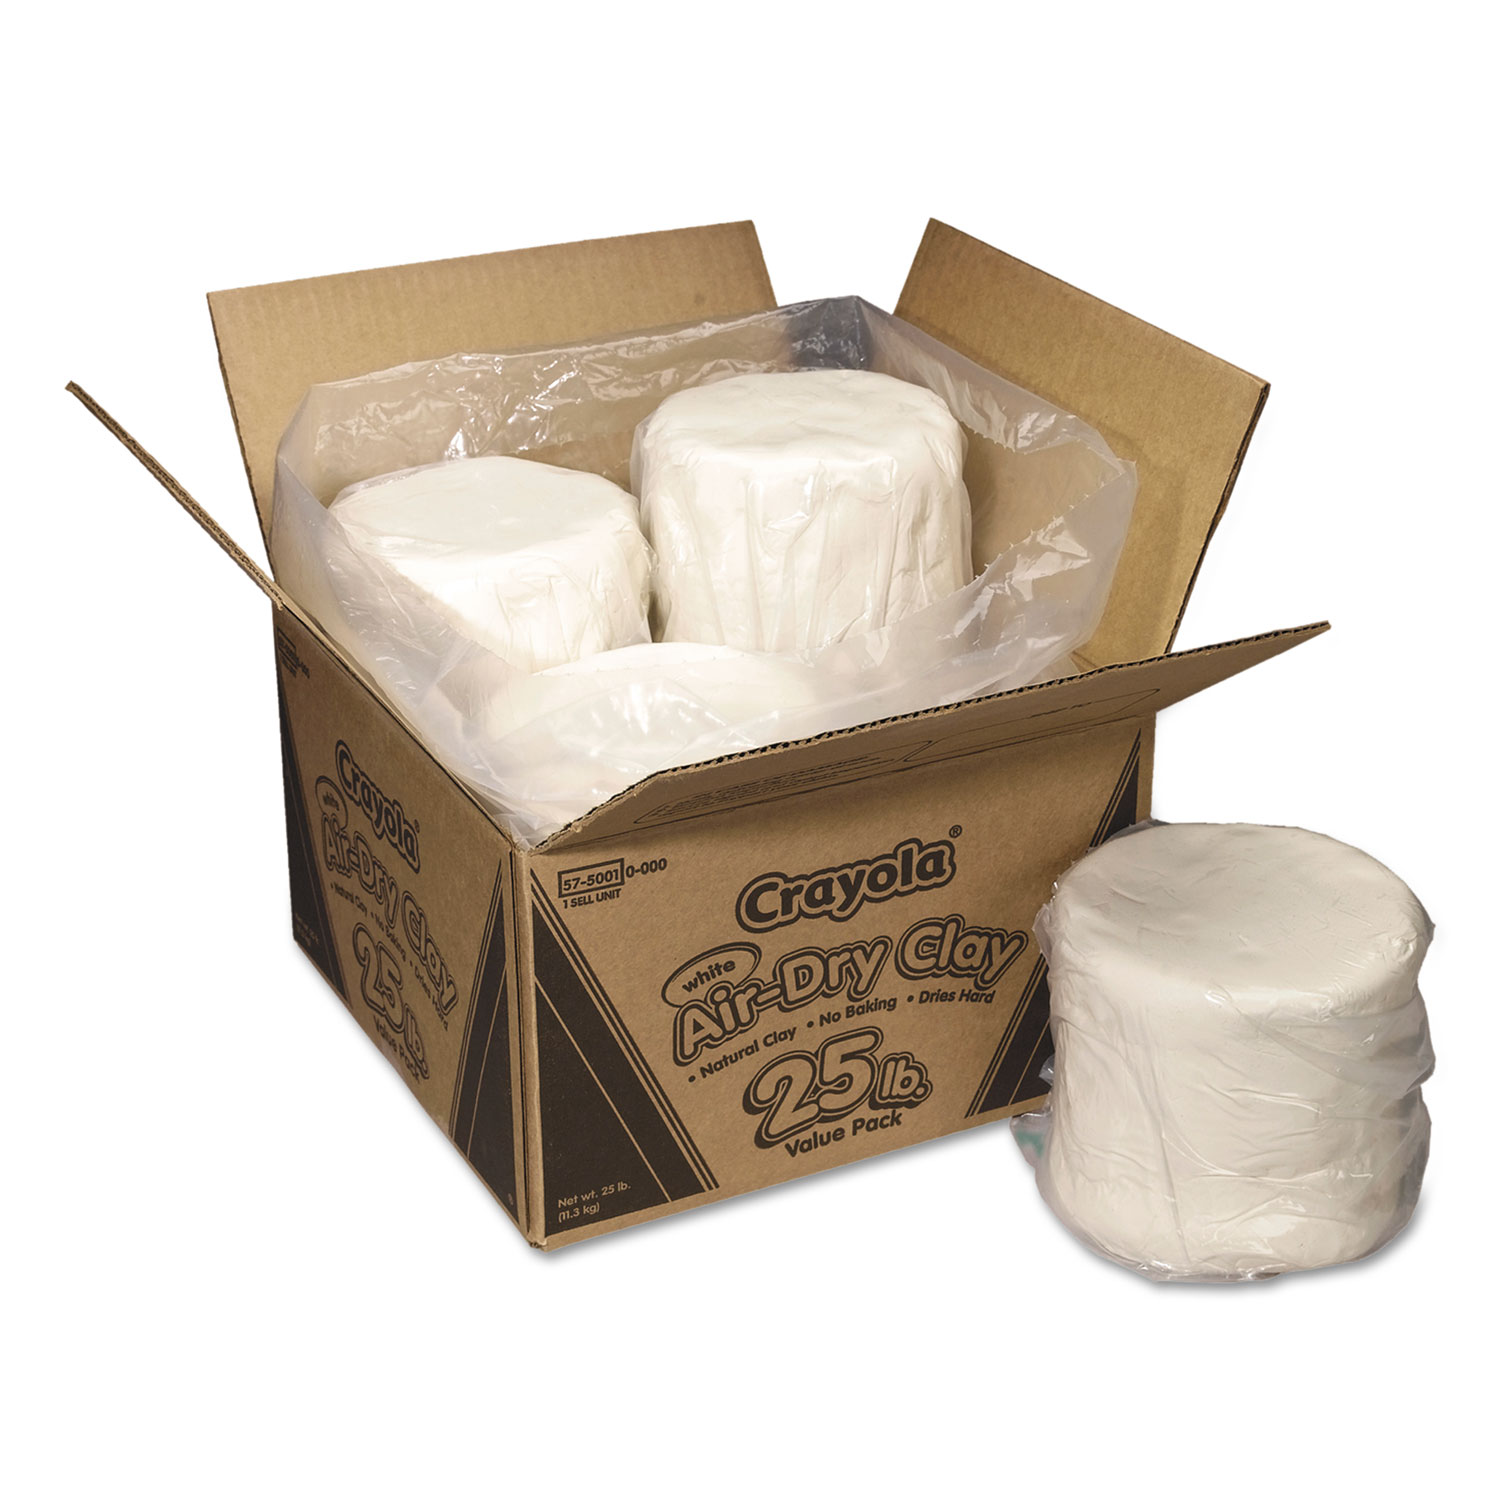  Crayola 575001 Air-Dry Clay, White, 25lb Box (CYO575001) 